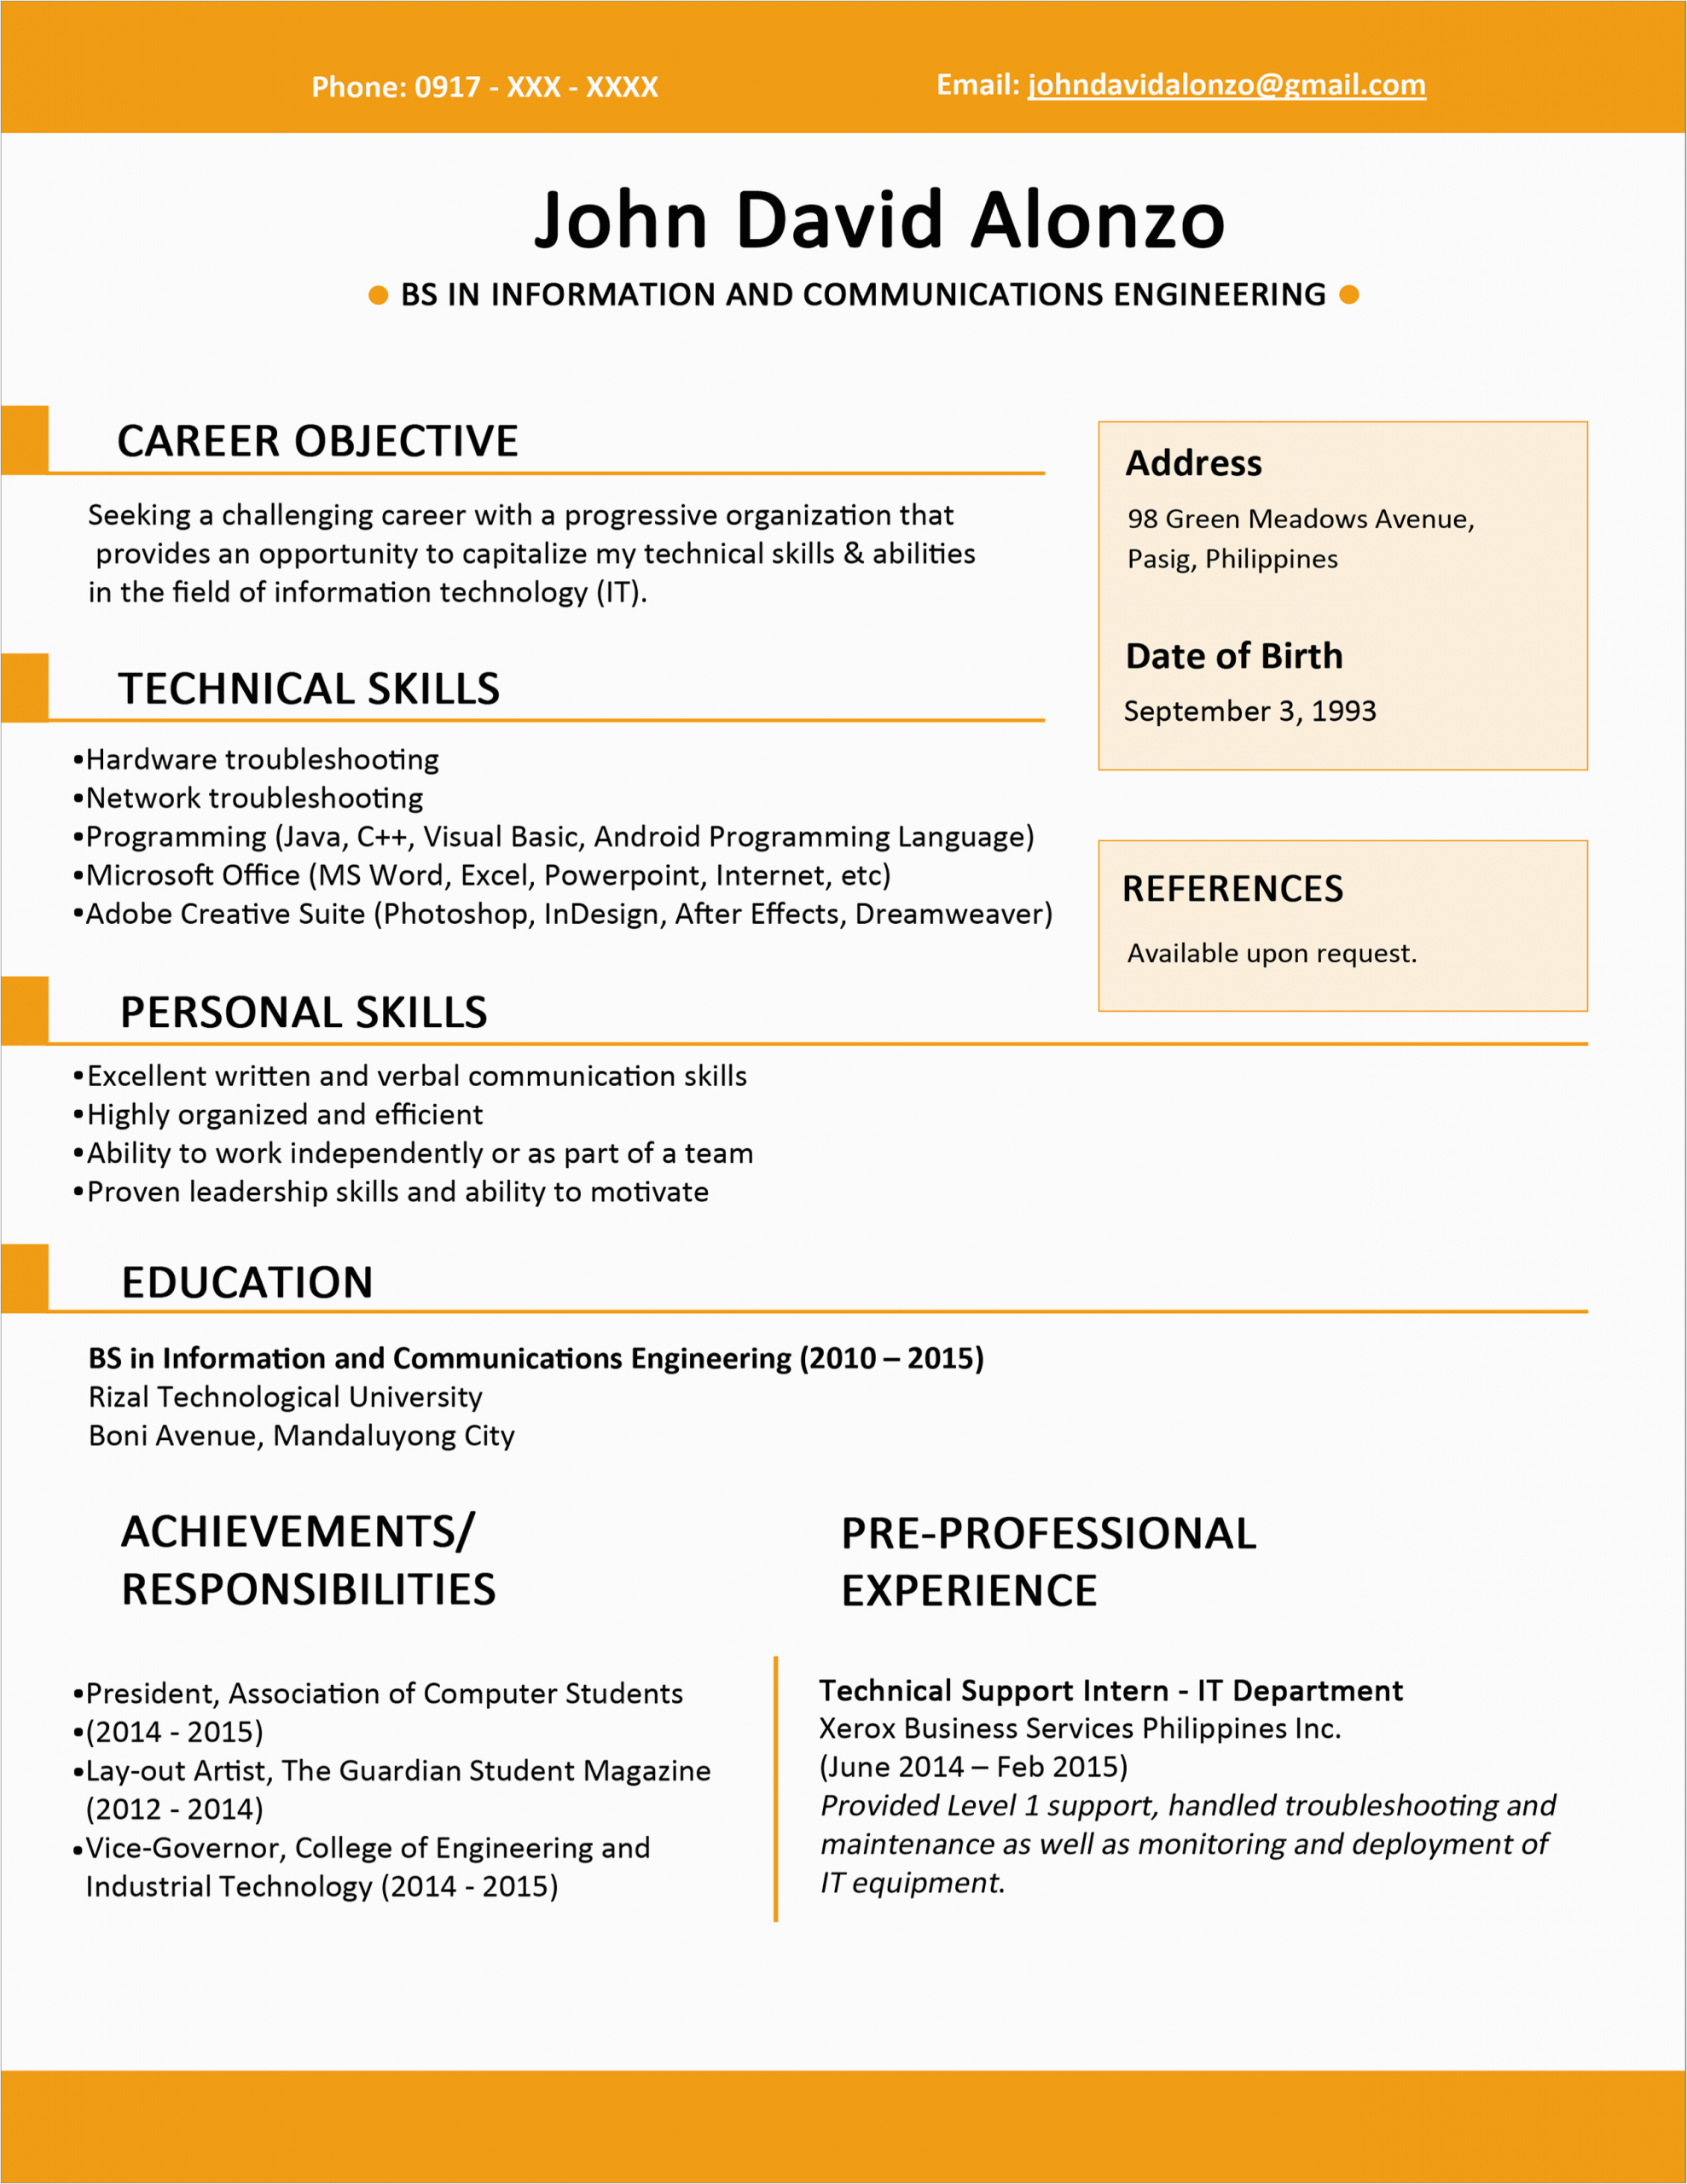 Sample Resume for Cpa Fresh Graduate Philippines Sample Resume format for Fresh Graduates E Page format